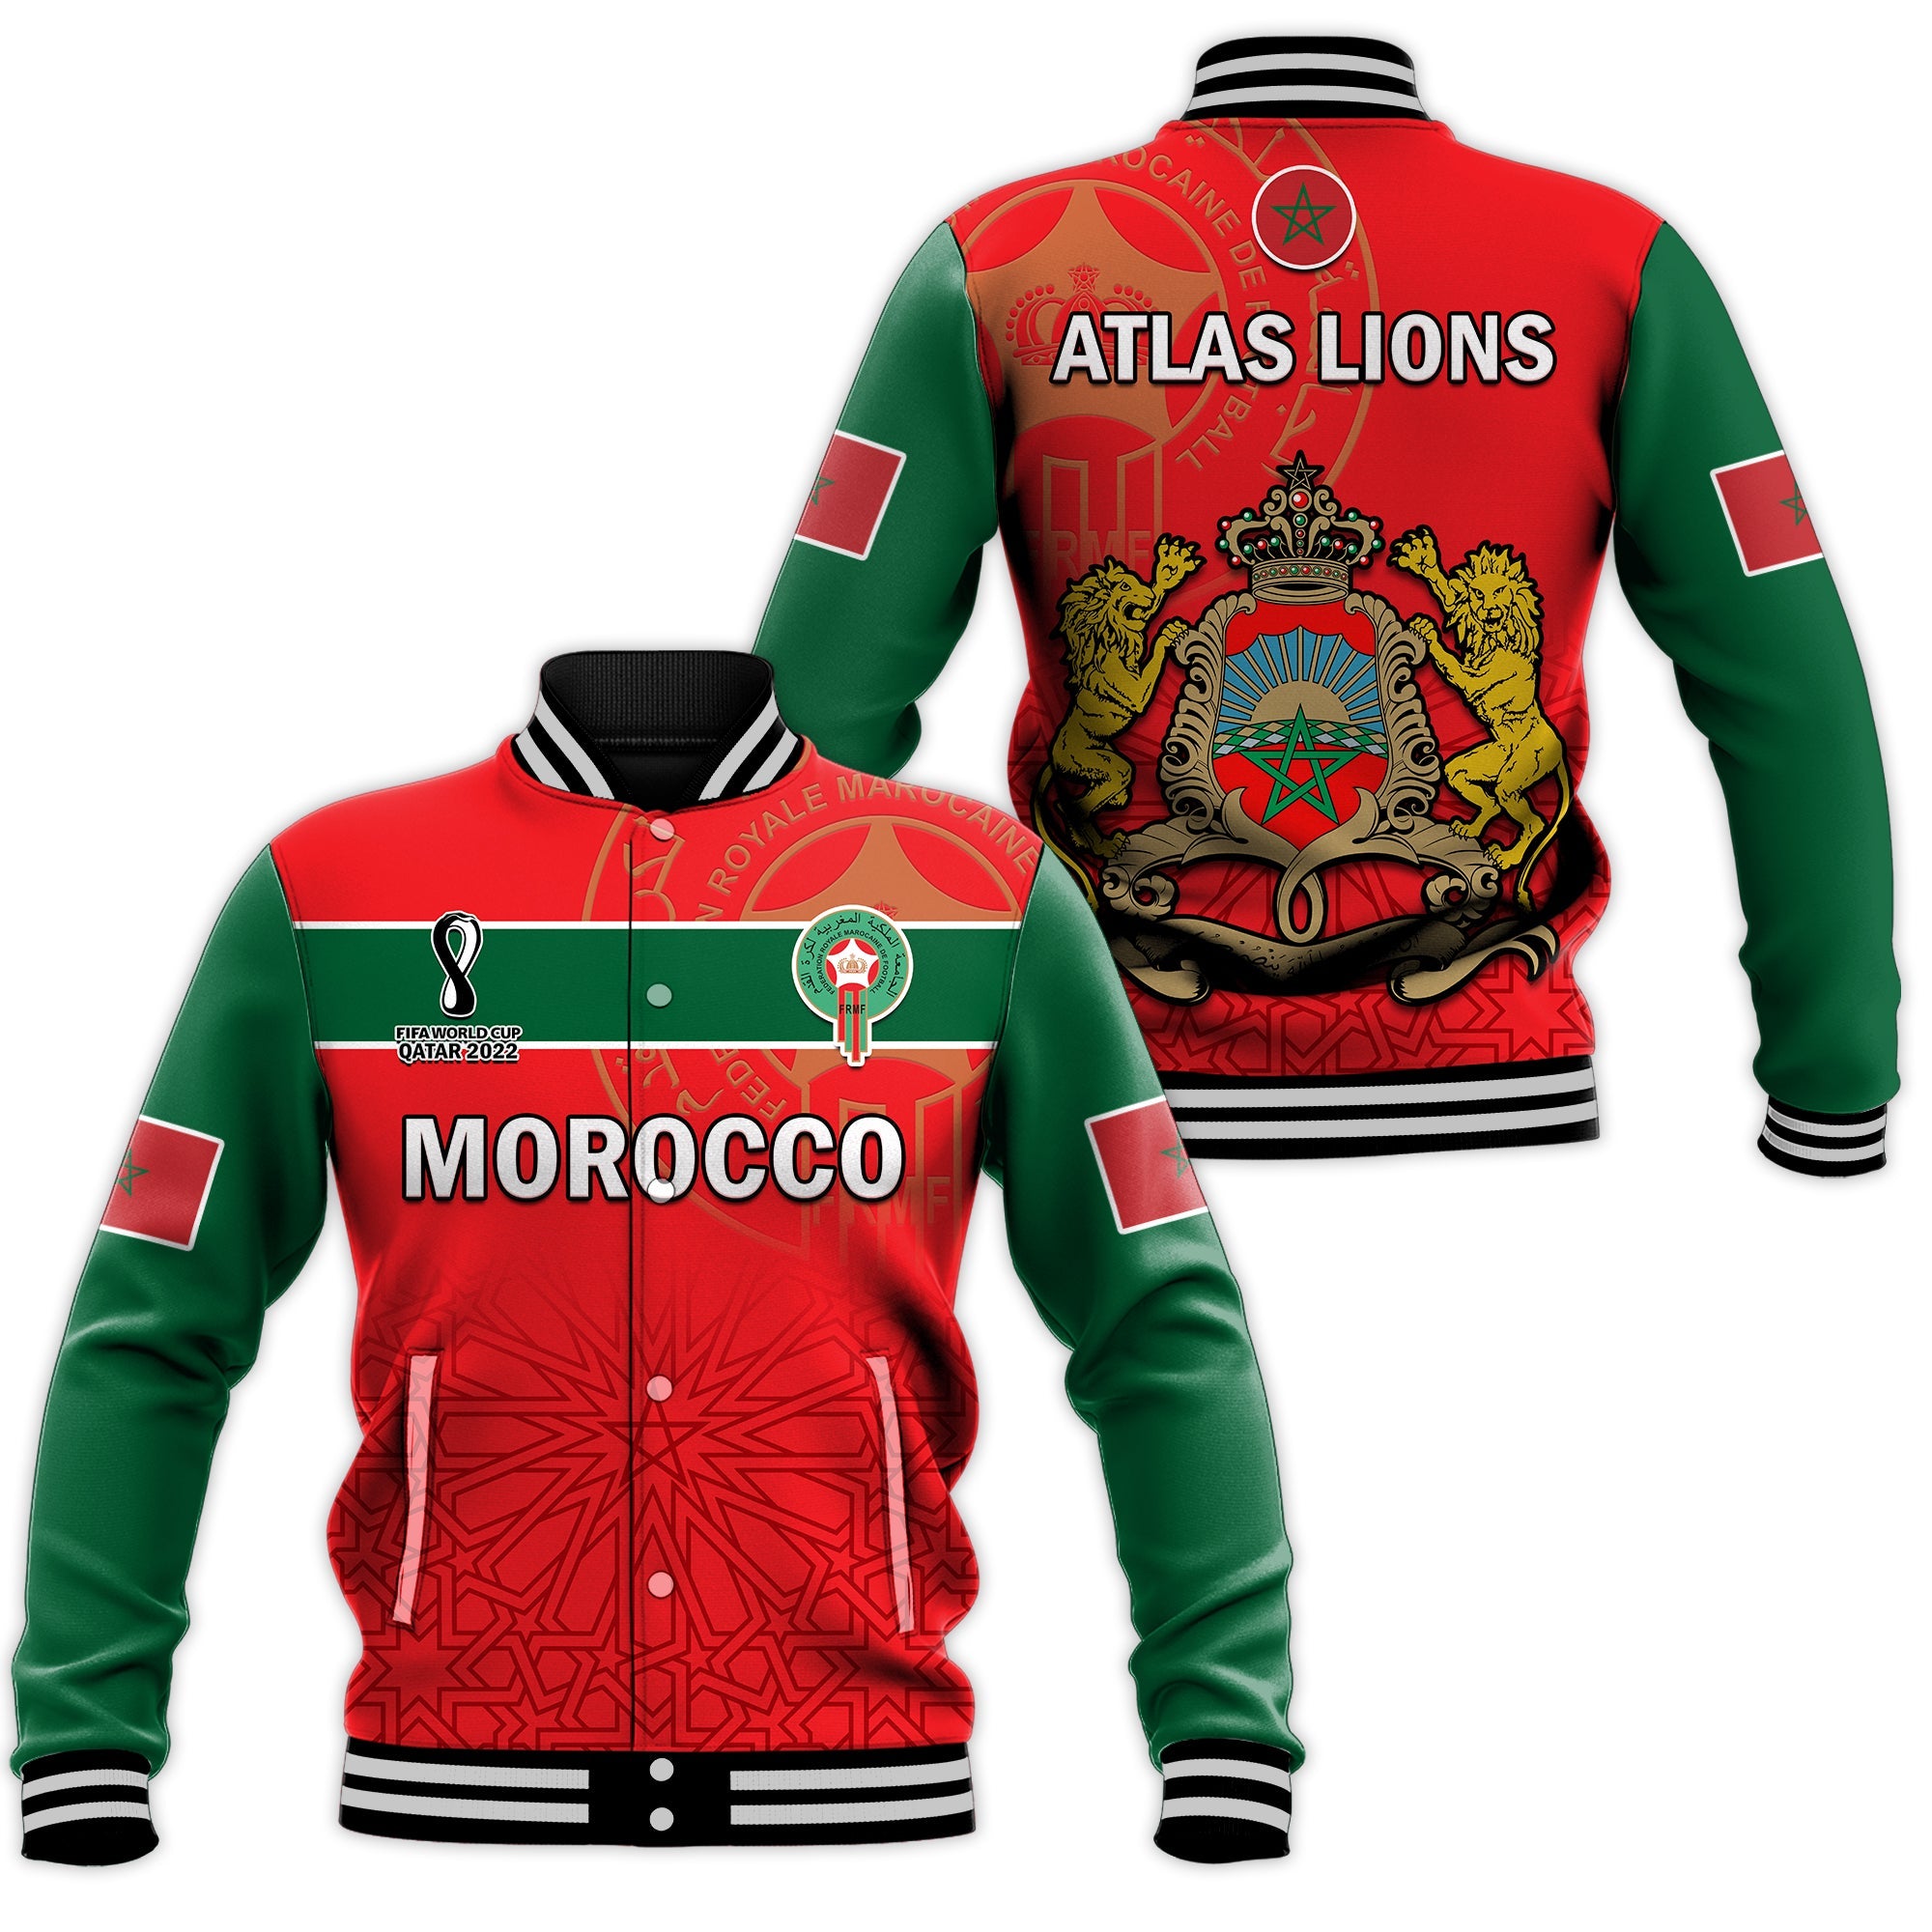 morocco-football-basseball-jacket-atlas-lions-red-world-cup-2022